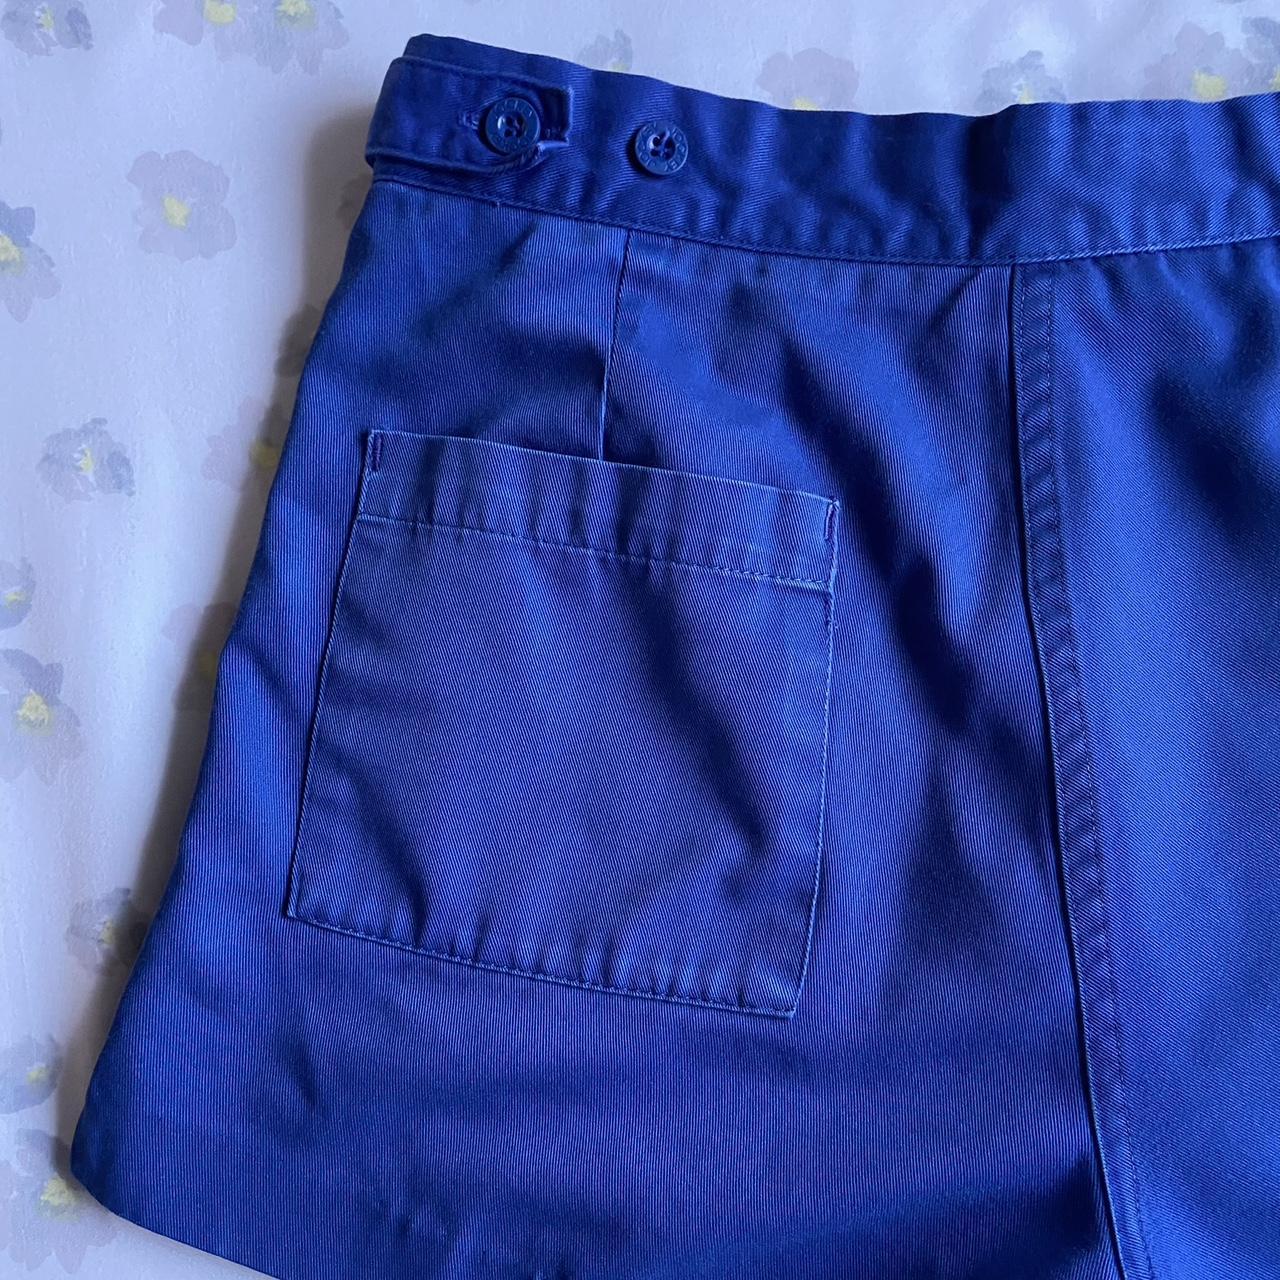 Jockey Women's Blue and White Shorts (4)